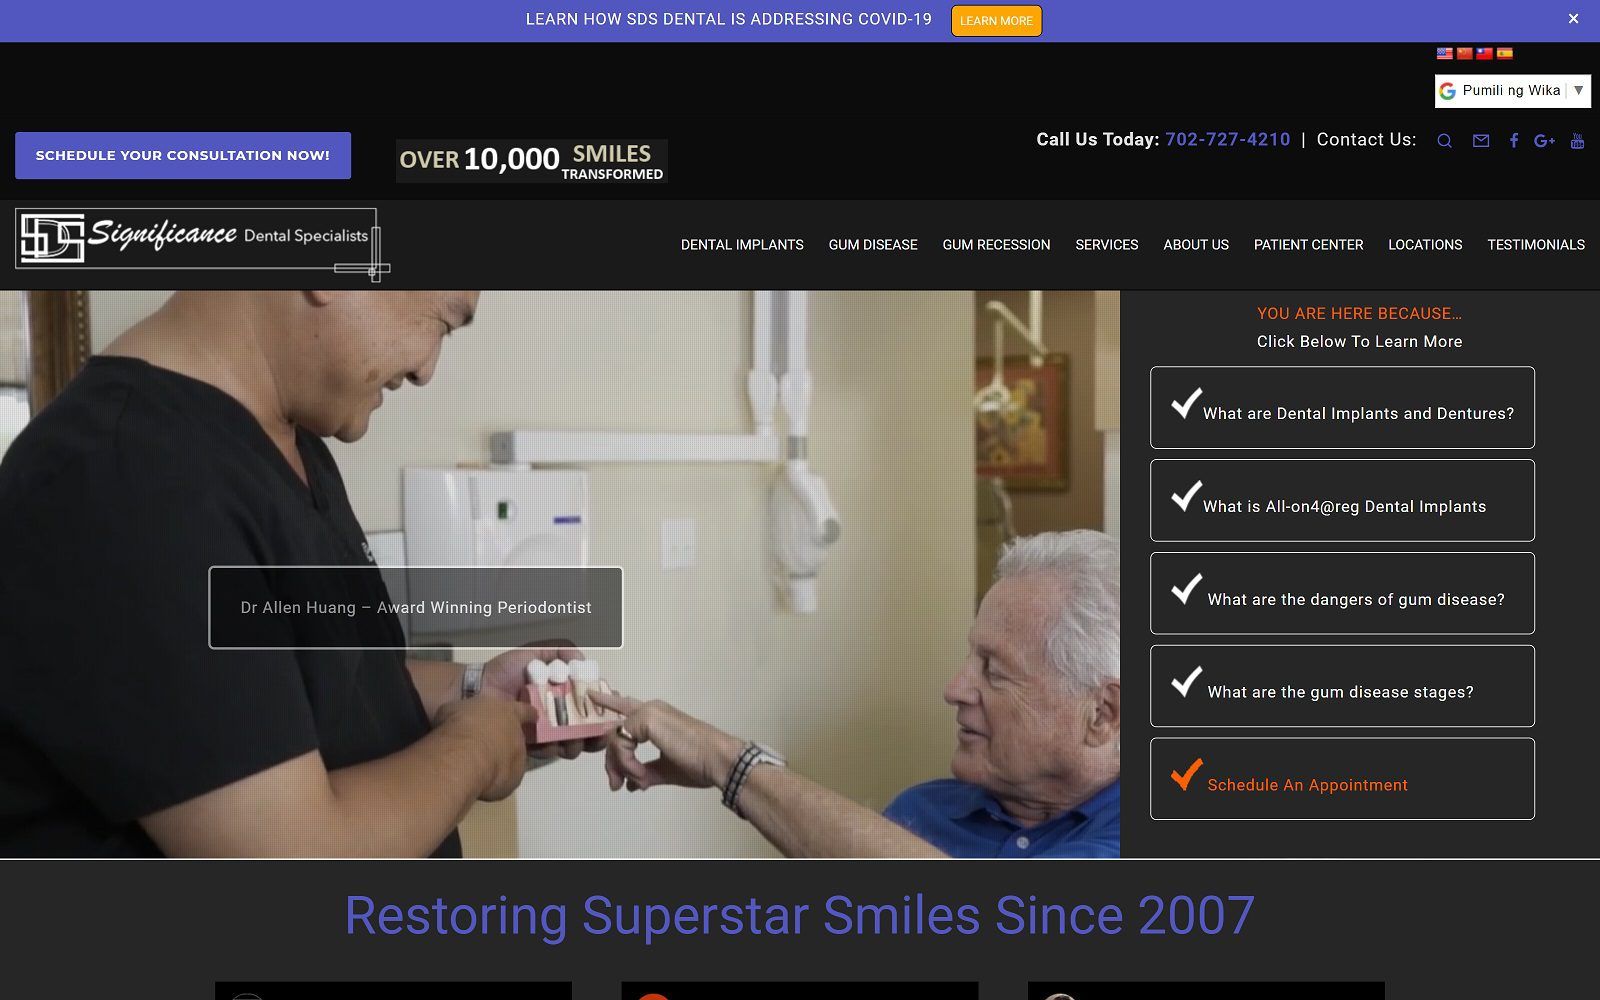 The screenshot of significance dental specialists dr. Allen huang website